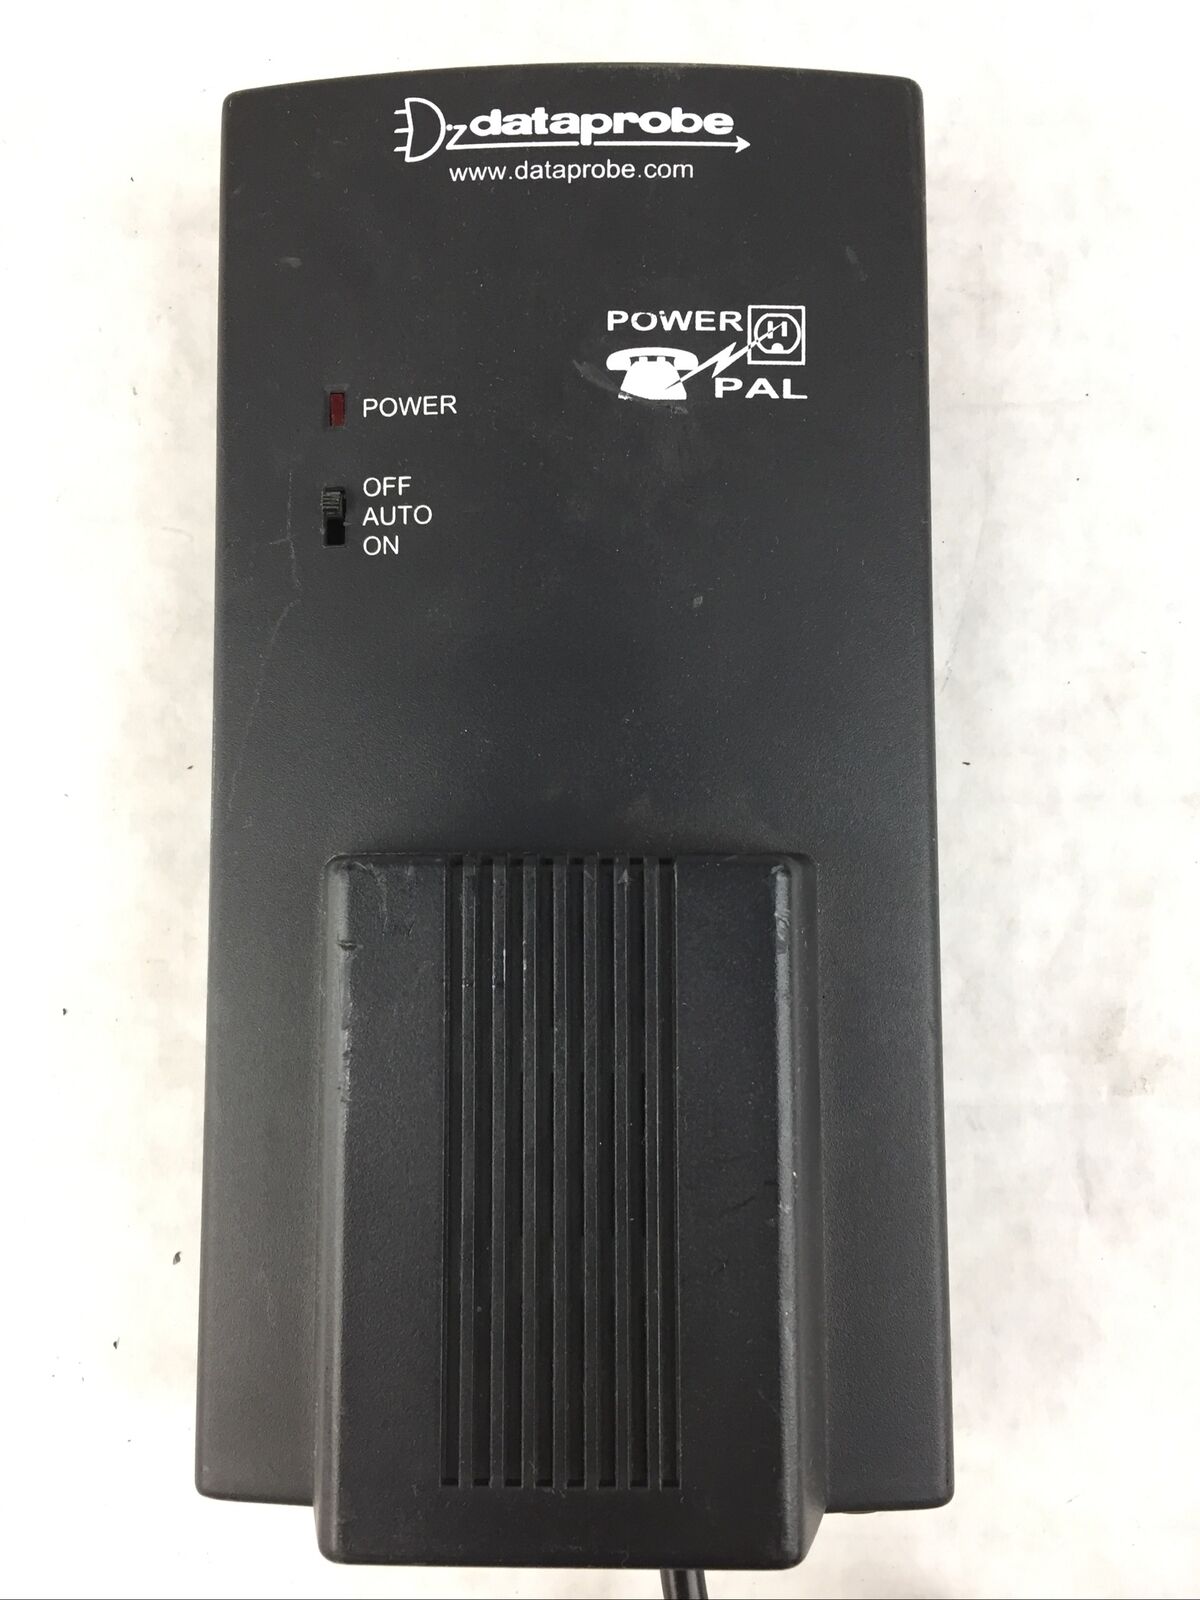 DataProbe Power Pal PP-NC-01 120 VAC 60Hz